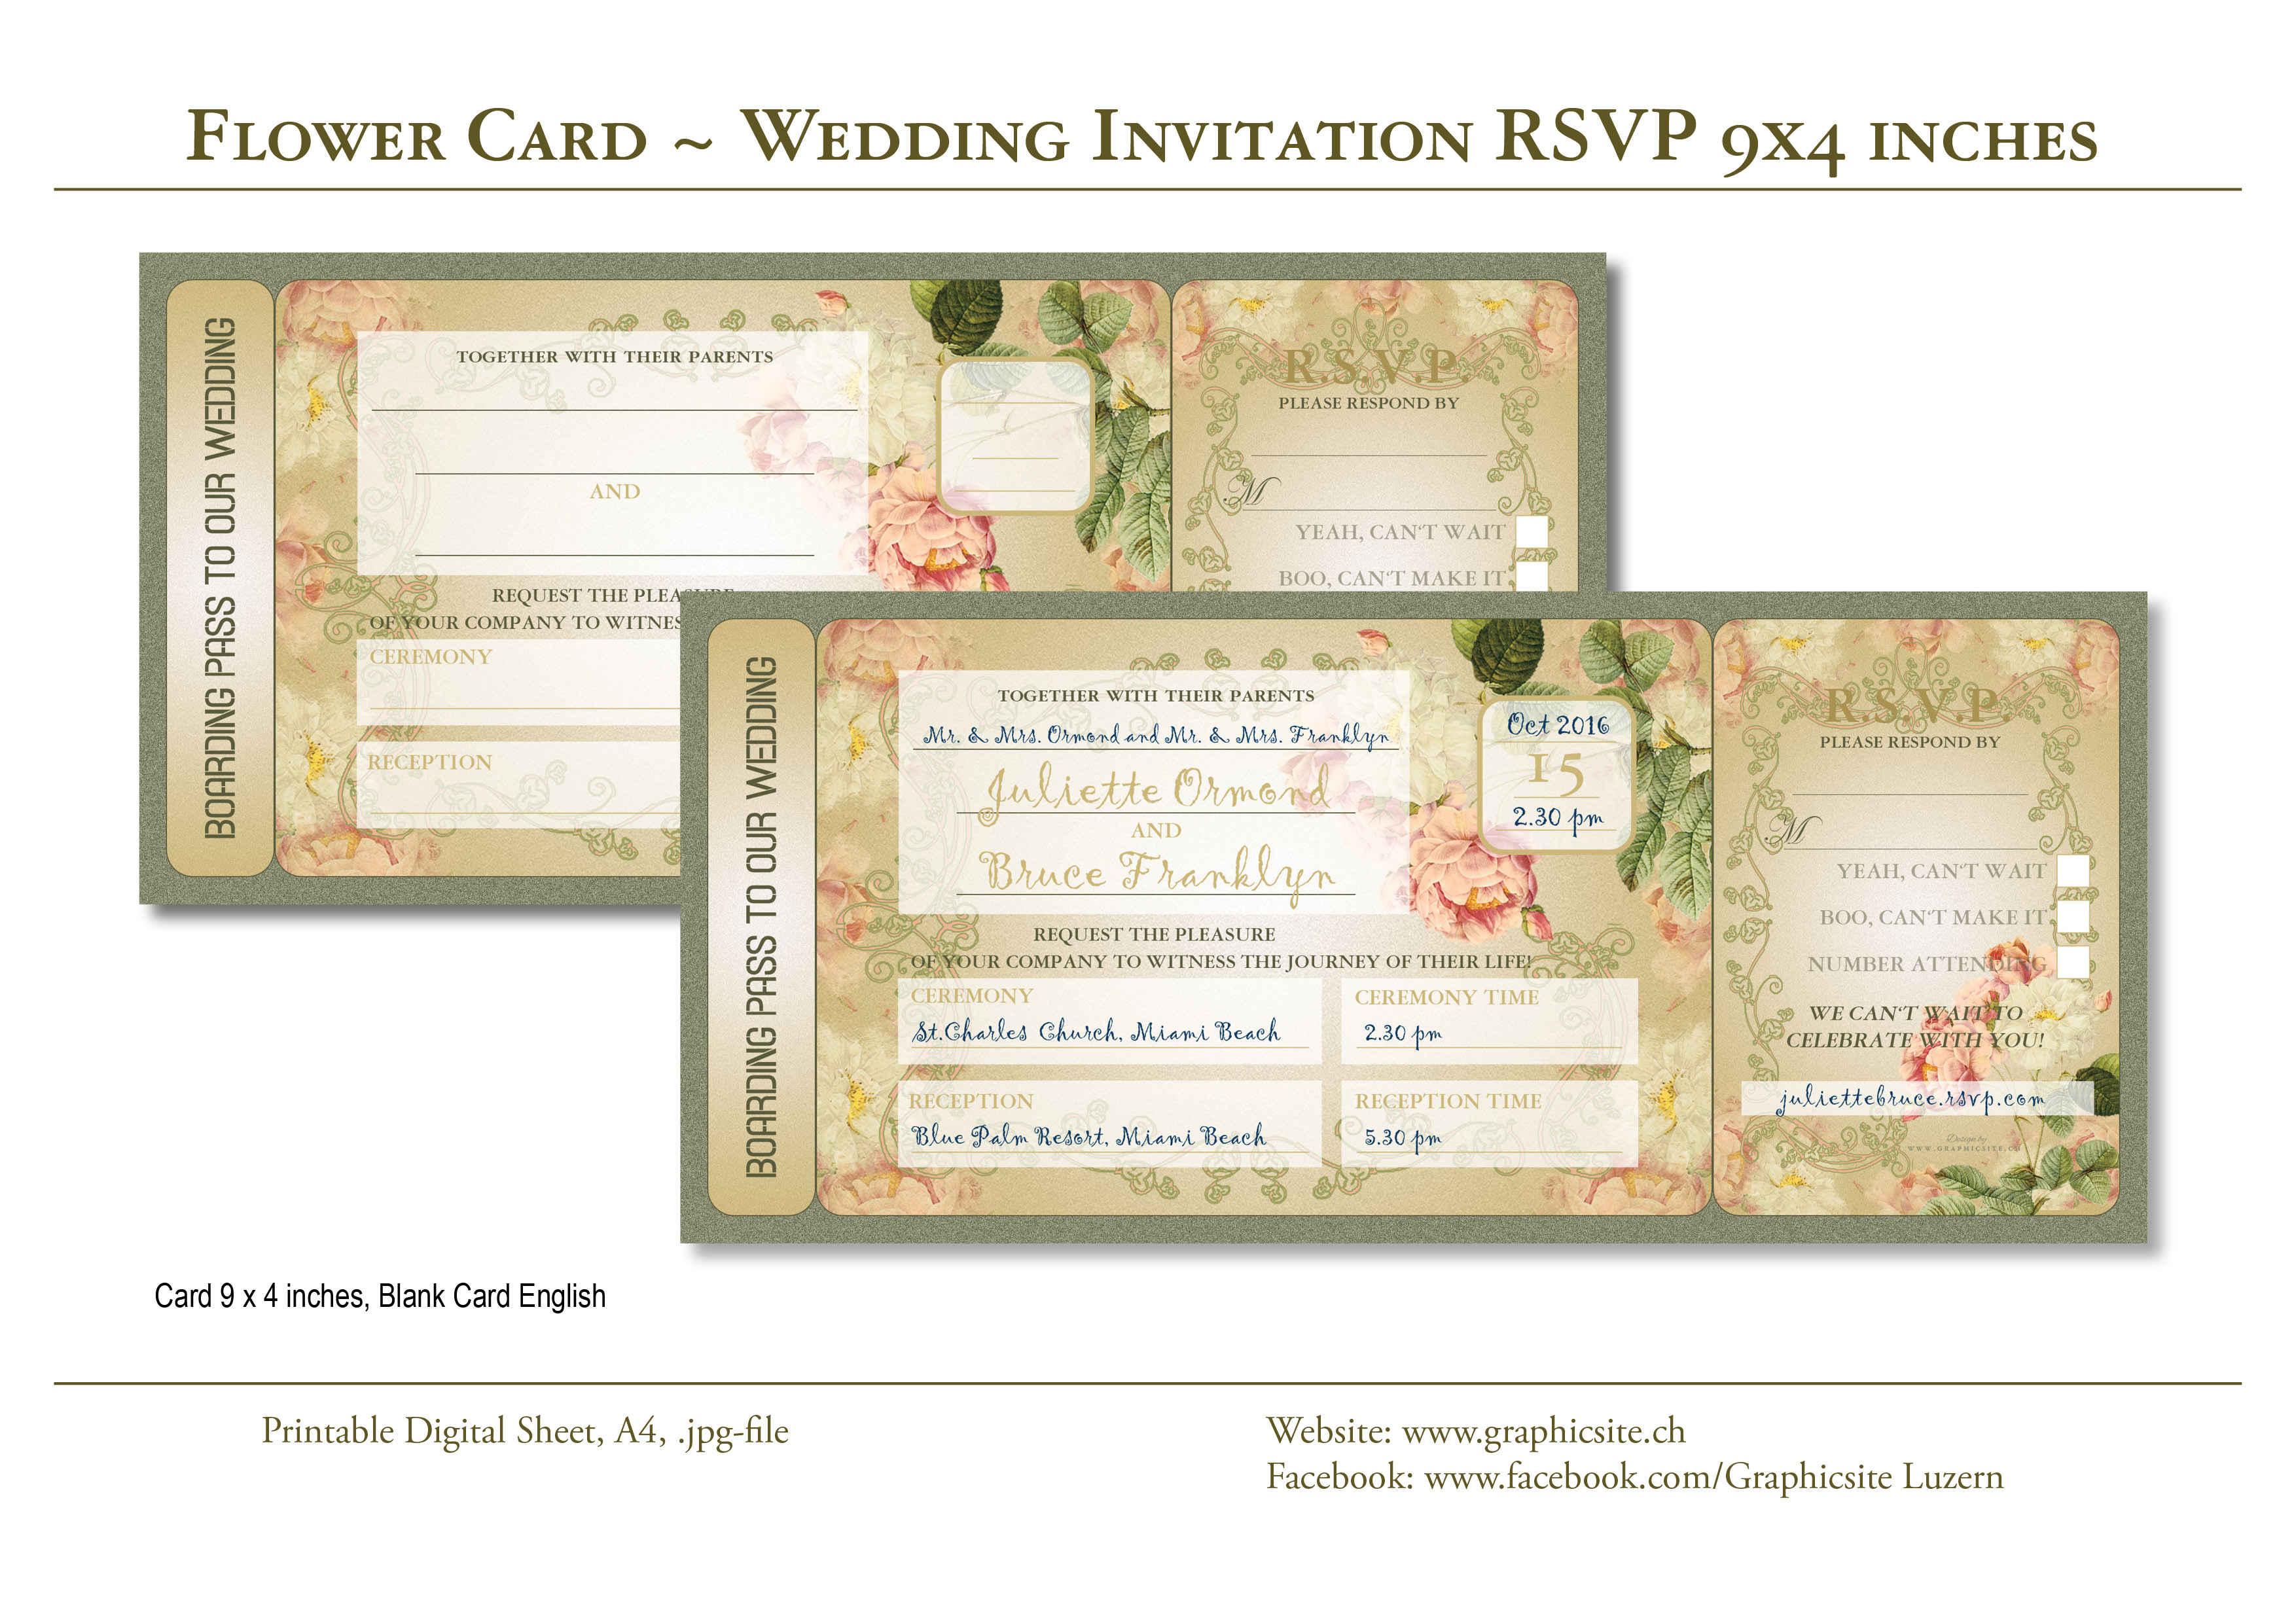 Printable Digital Sheets - Cards 9x4 inches - Flower Cards - Wedding Invitation RSVP - Graphic Design Luzern, Schweiz,